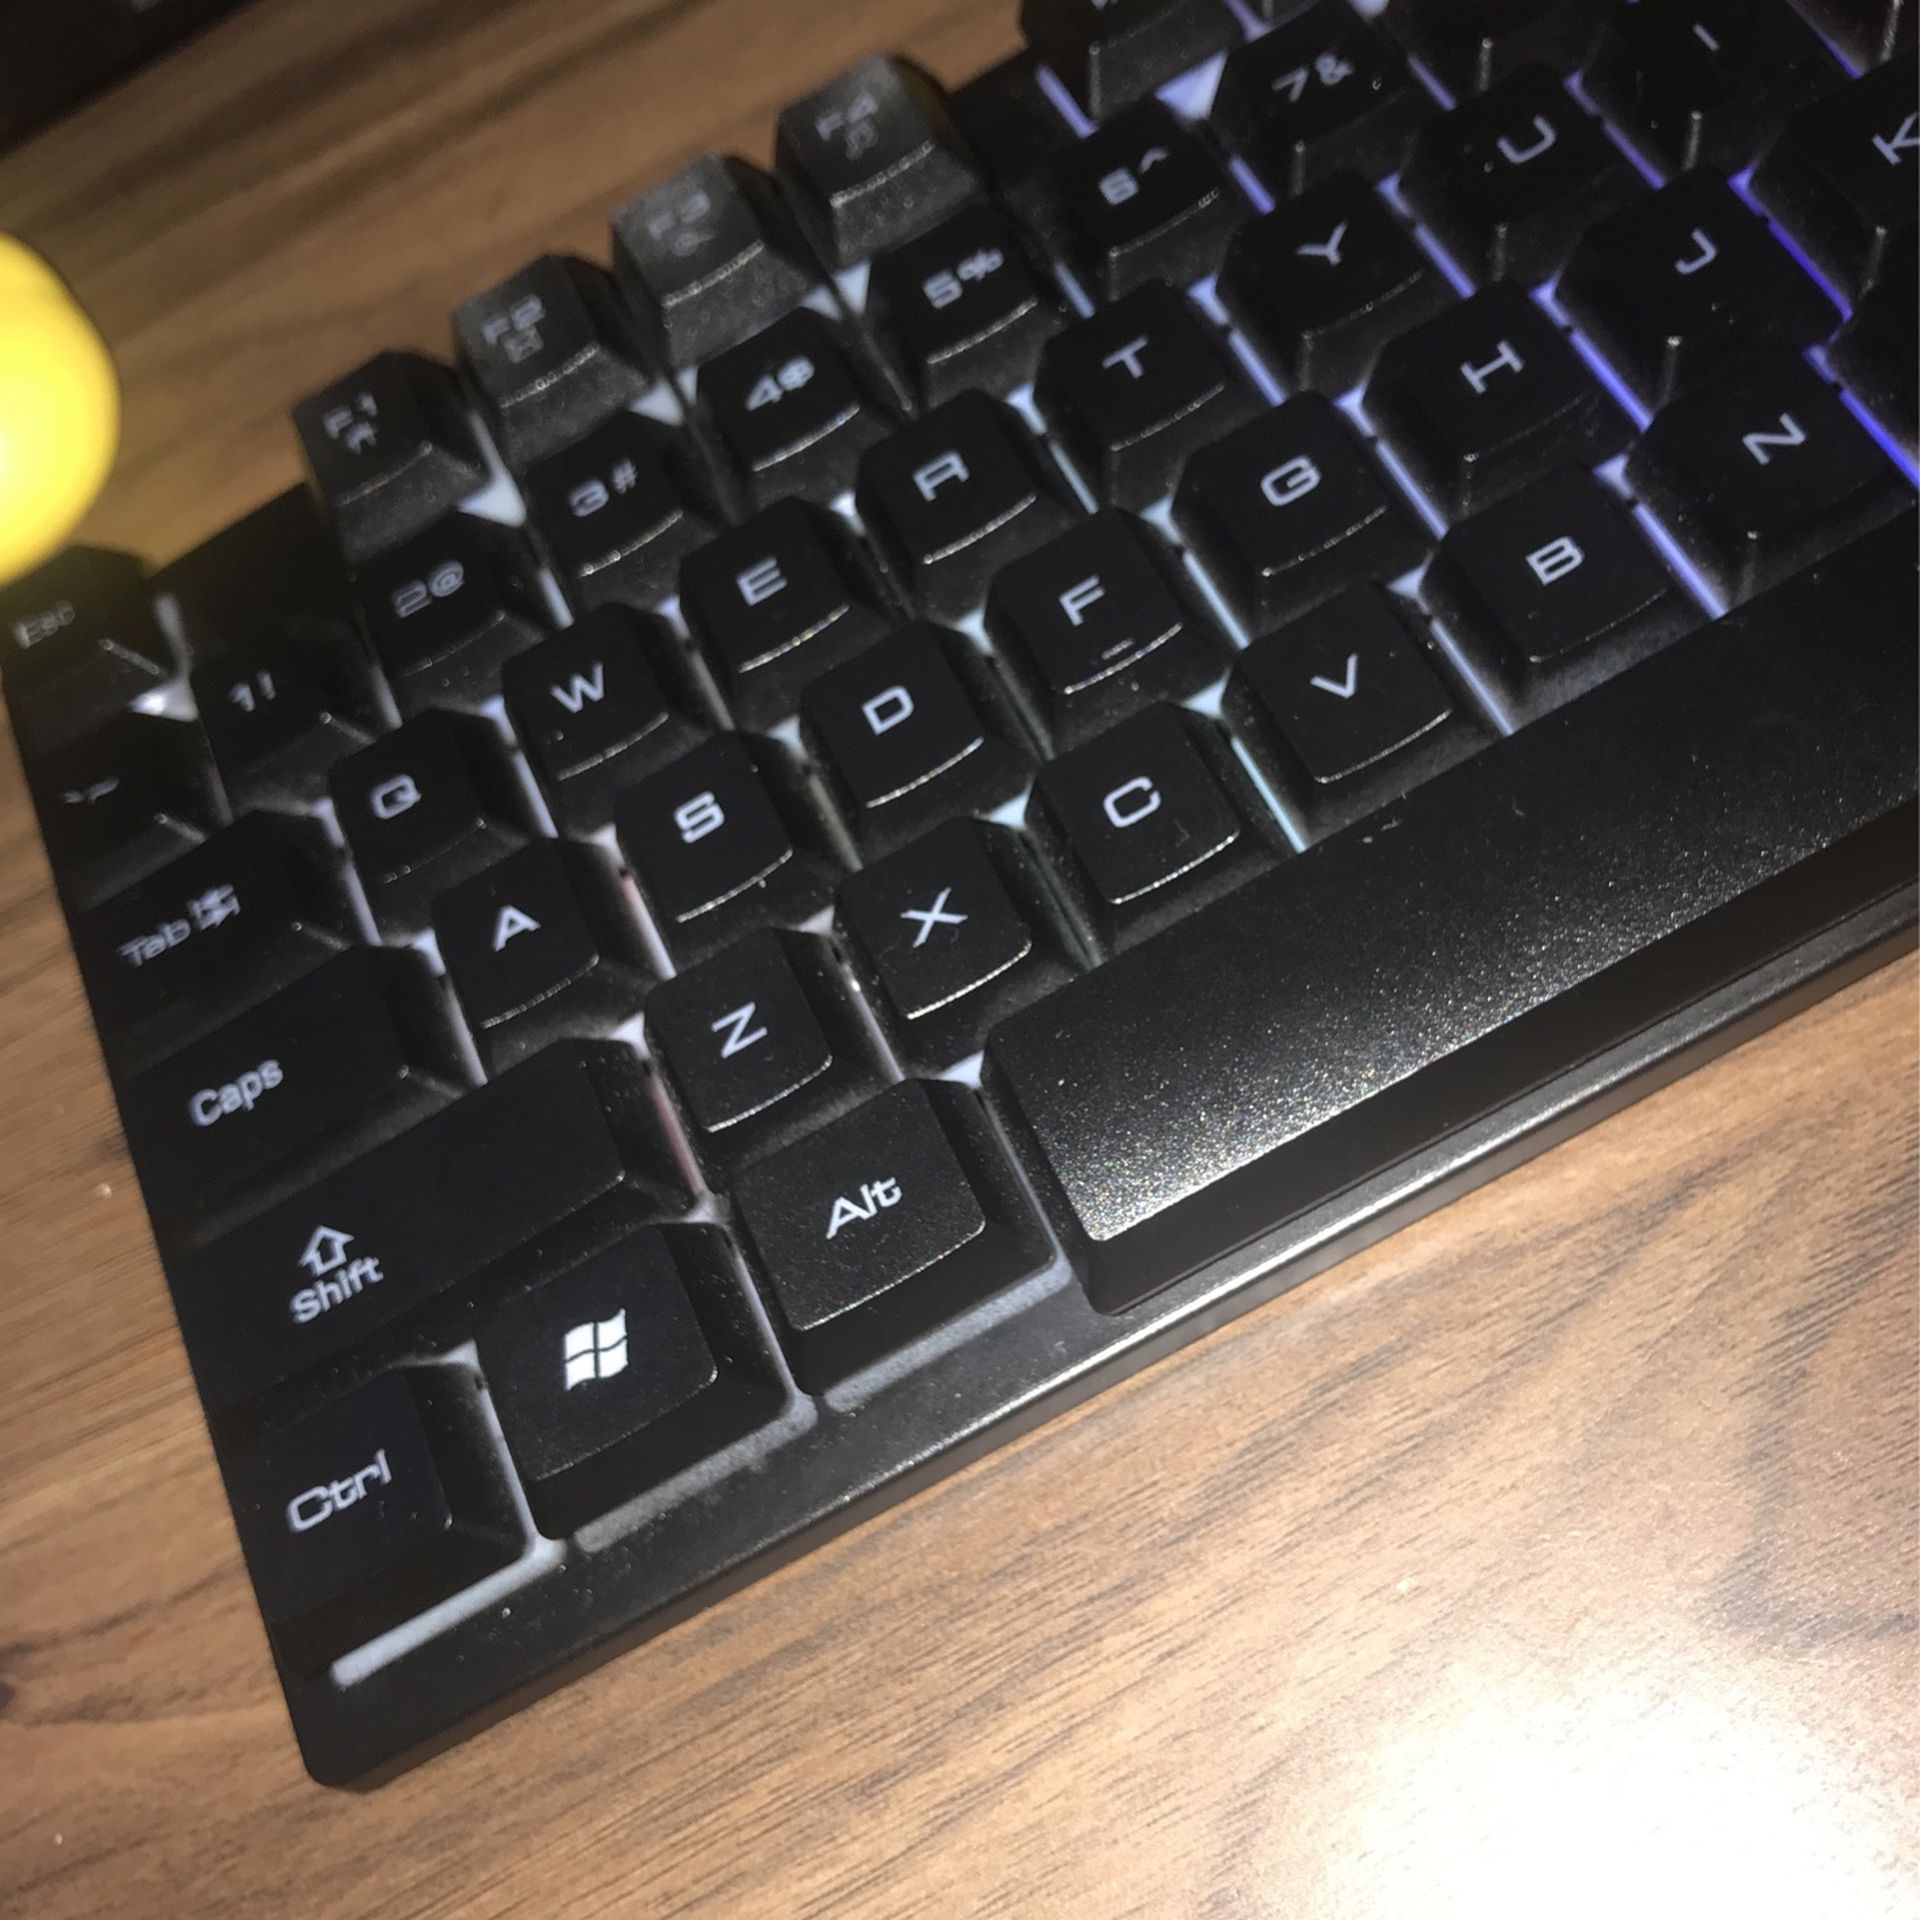 2Boom Gaming keyboard